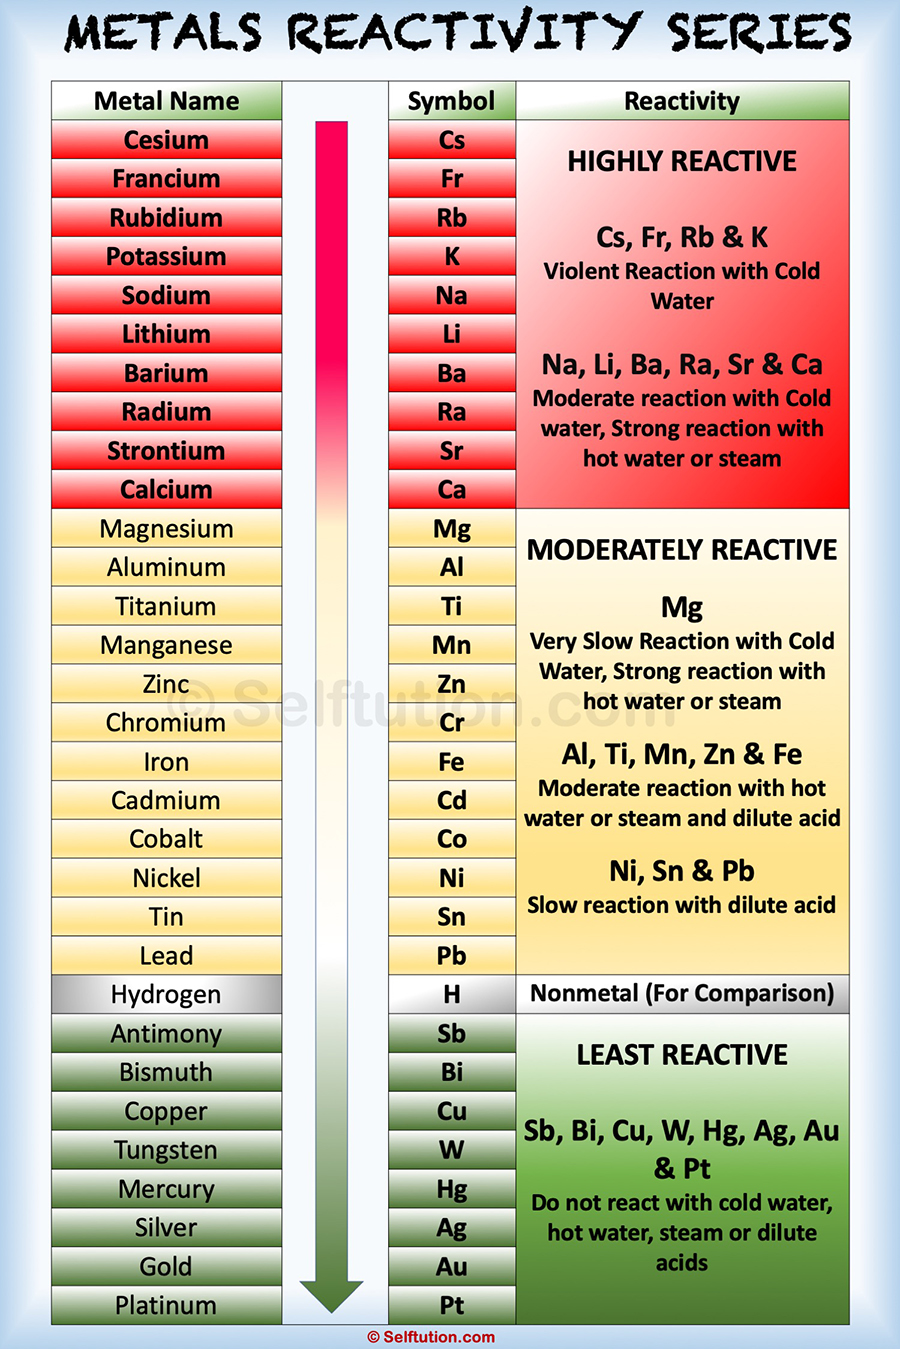 Reactivity Series Periodic Table